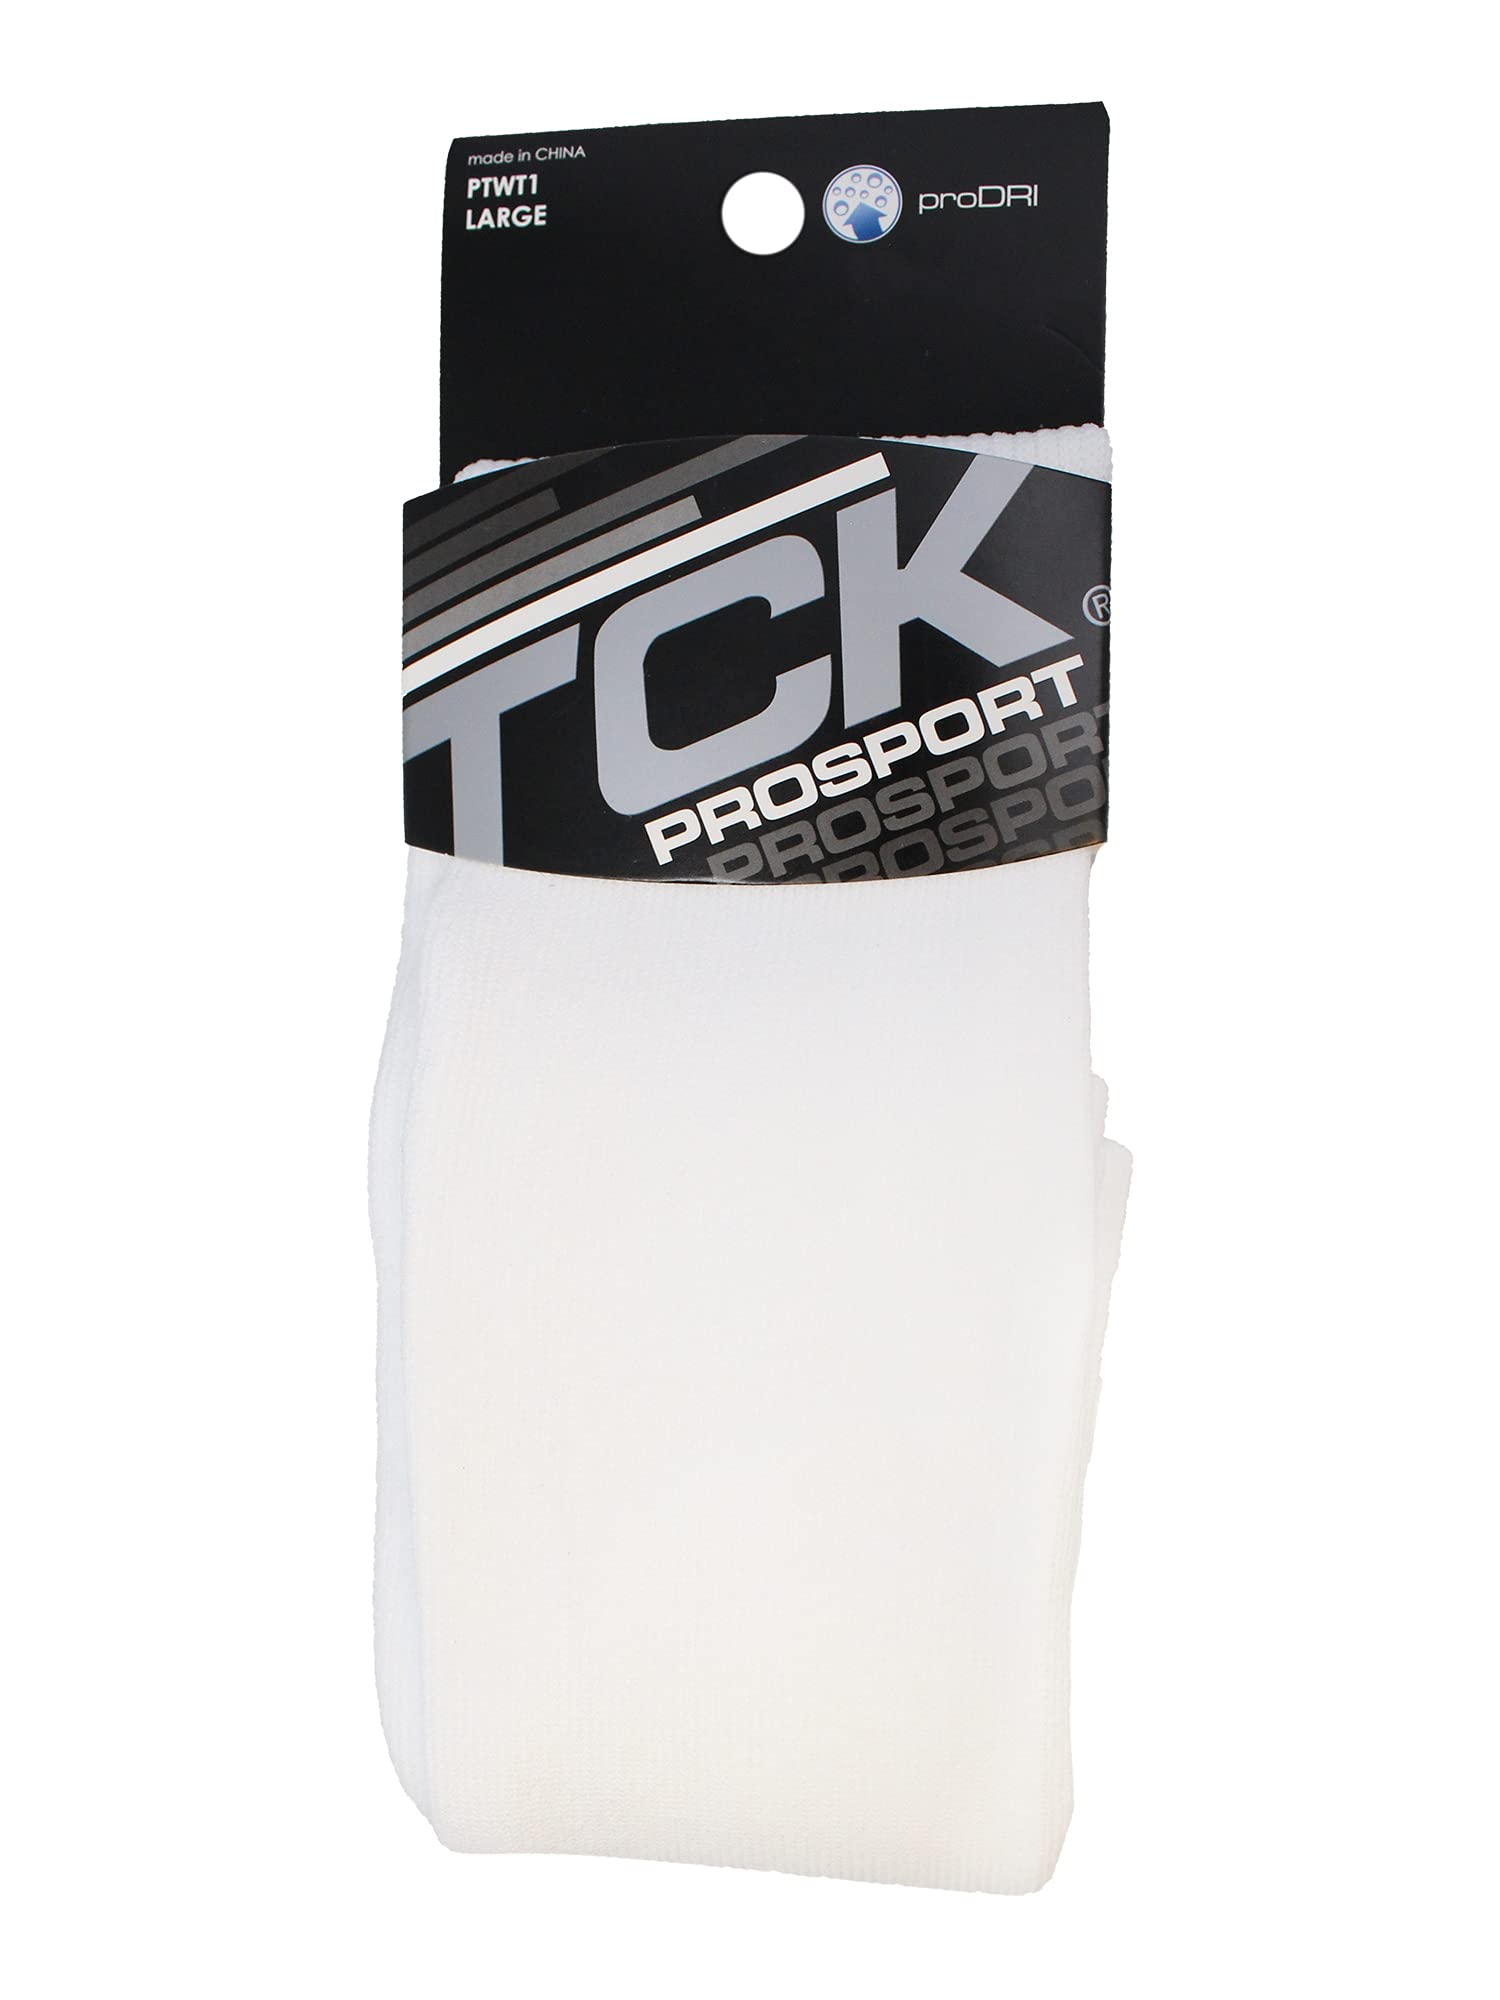 TCK Prosport Tube Socks Baseball Socks Softball Football